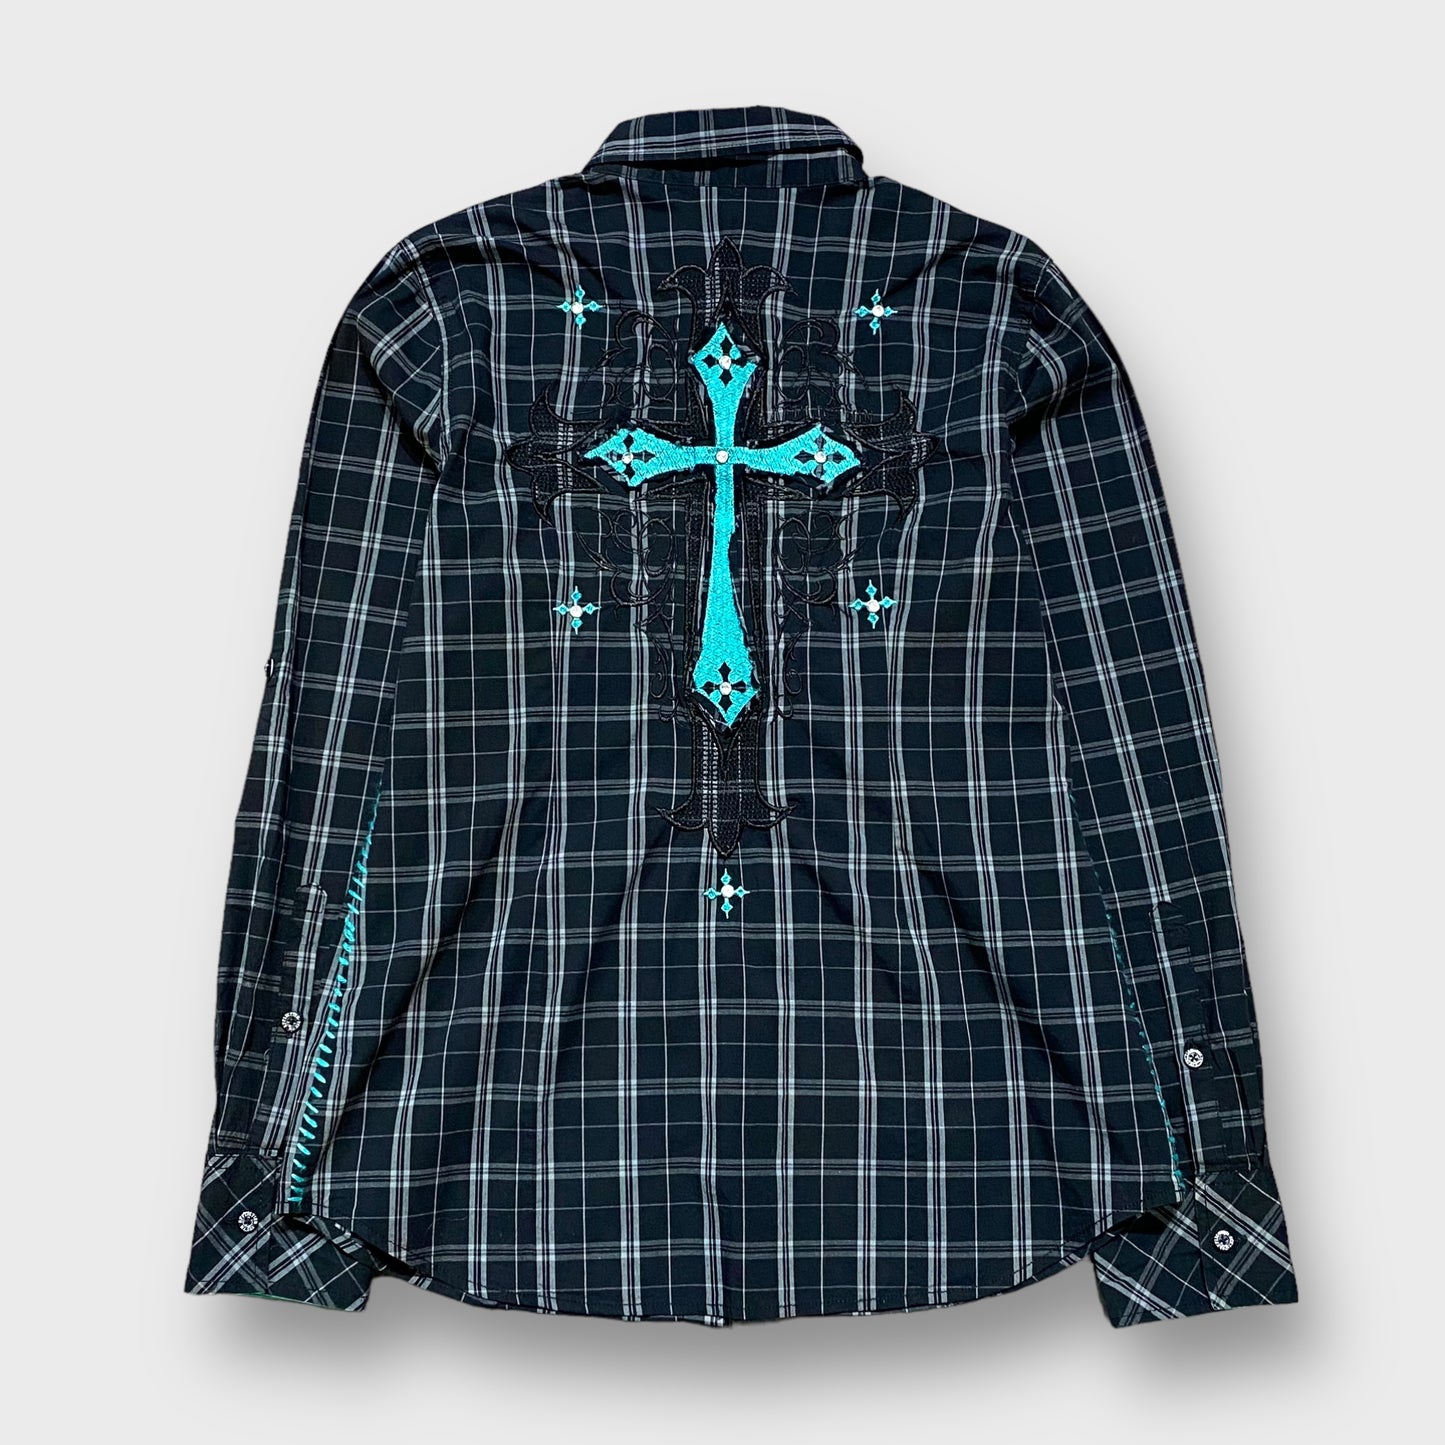 "AFFLICTION" Cross design plaid shirt